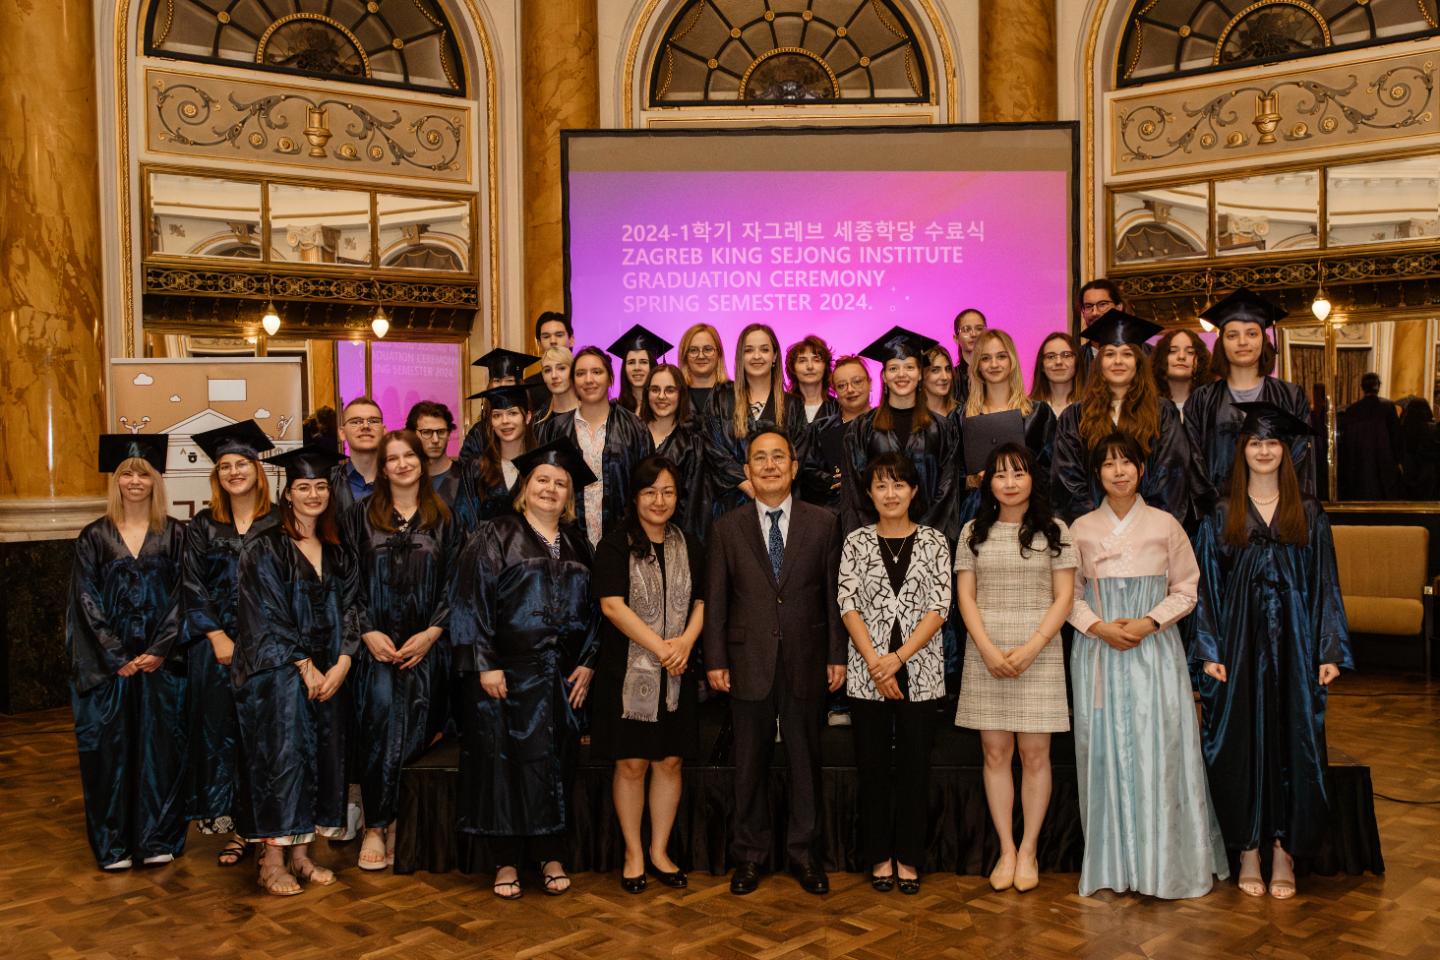 Veleposlanik Hong Sungwook nazočio je svečanosti dodjele diploma za proljetni semestar 2024. na Institutu kralja Sedžonga u Zagrebu